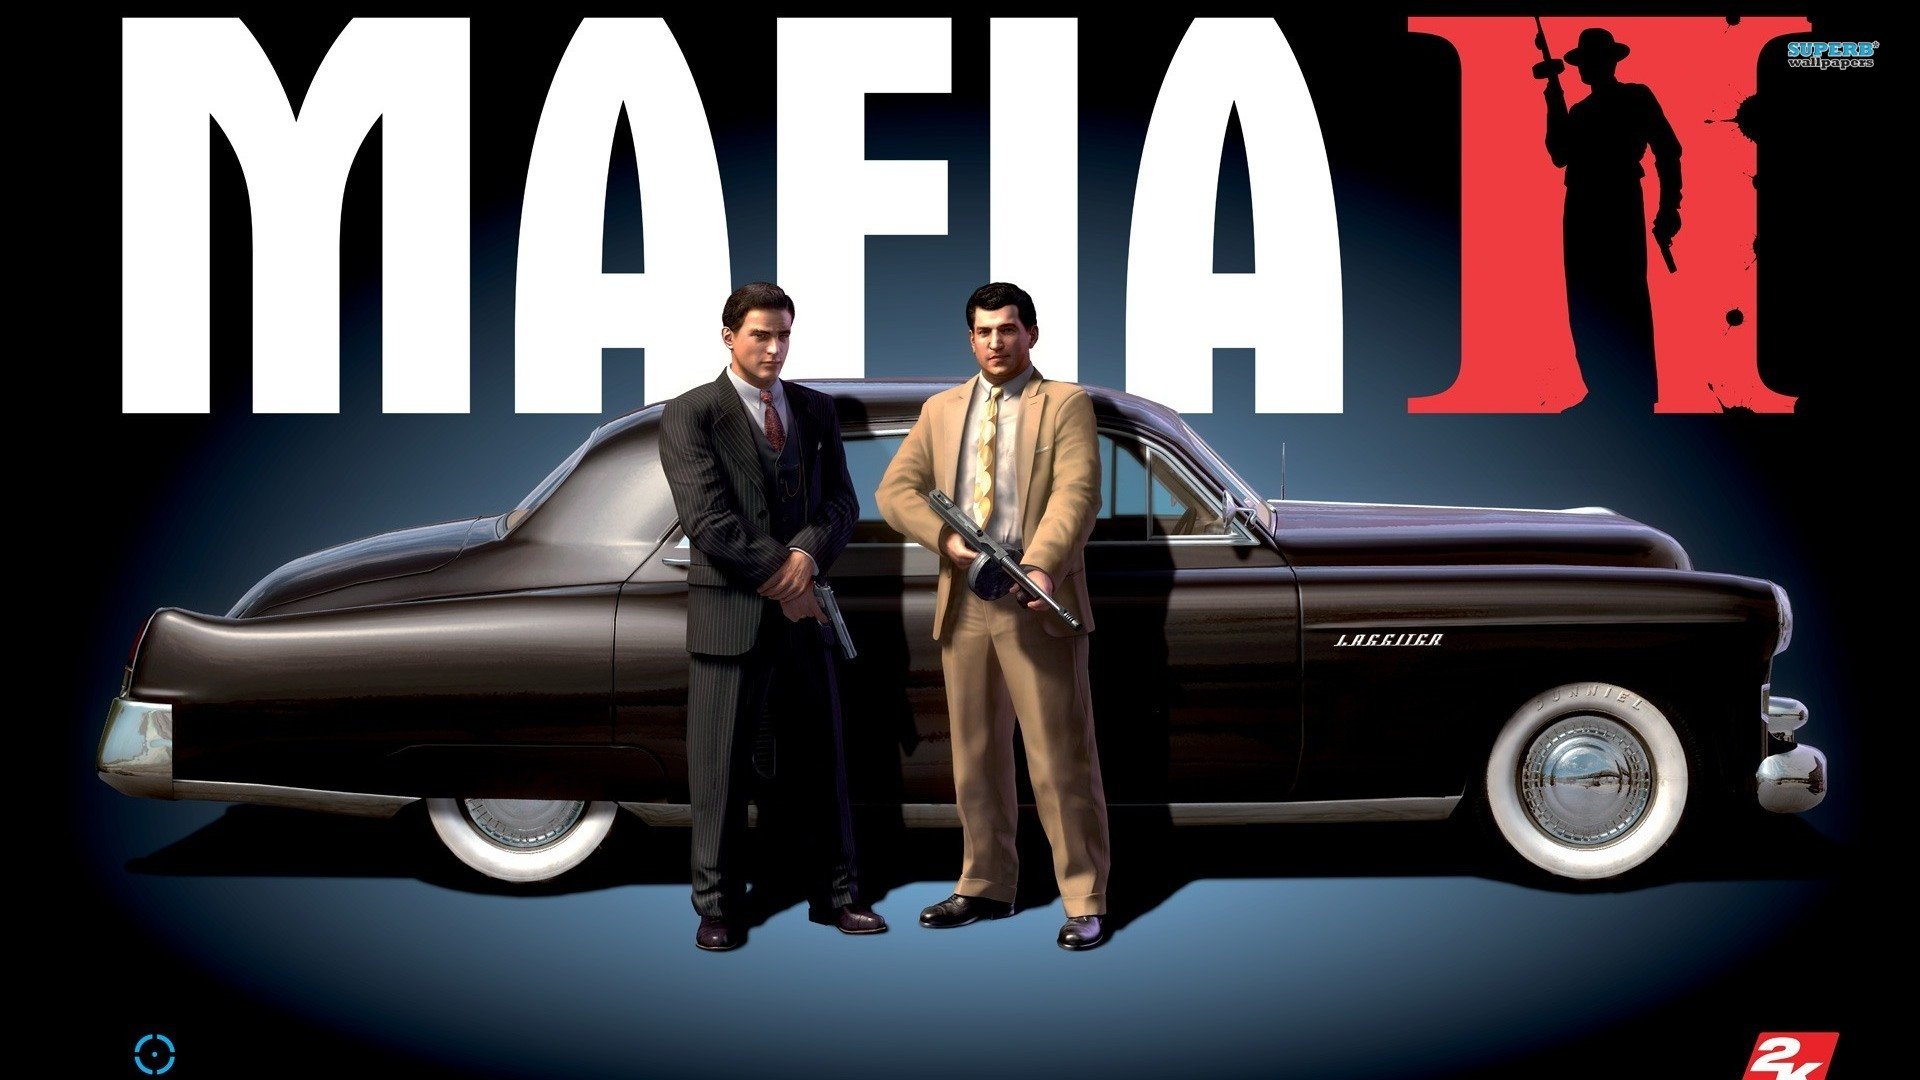 Awesome Mafia 2 free wallpaper ID:319665 for hd 1080p computer